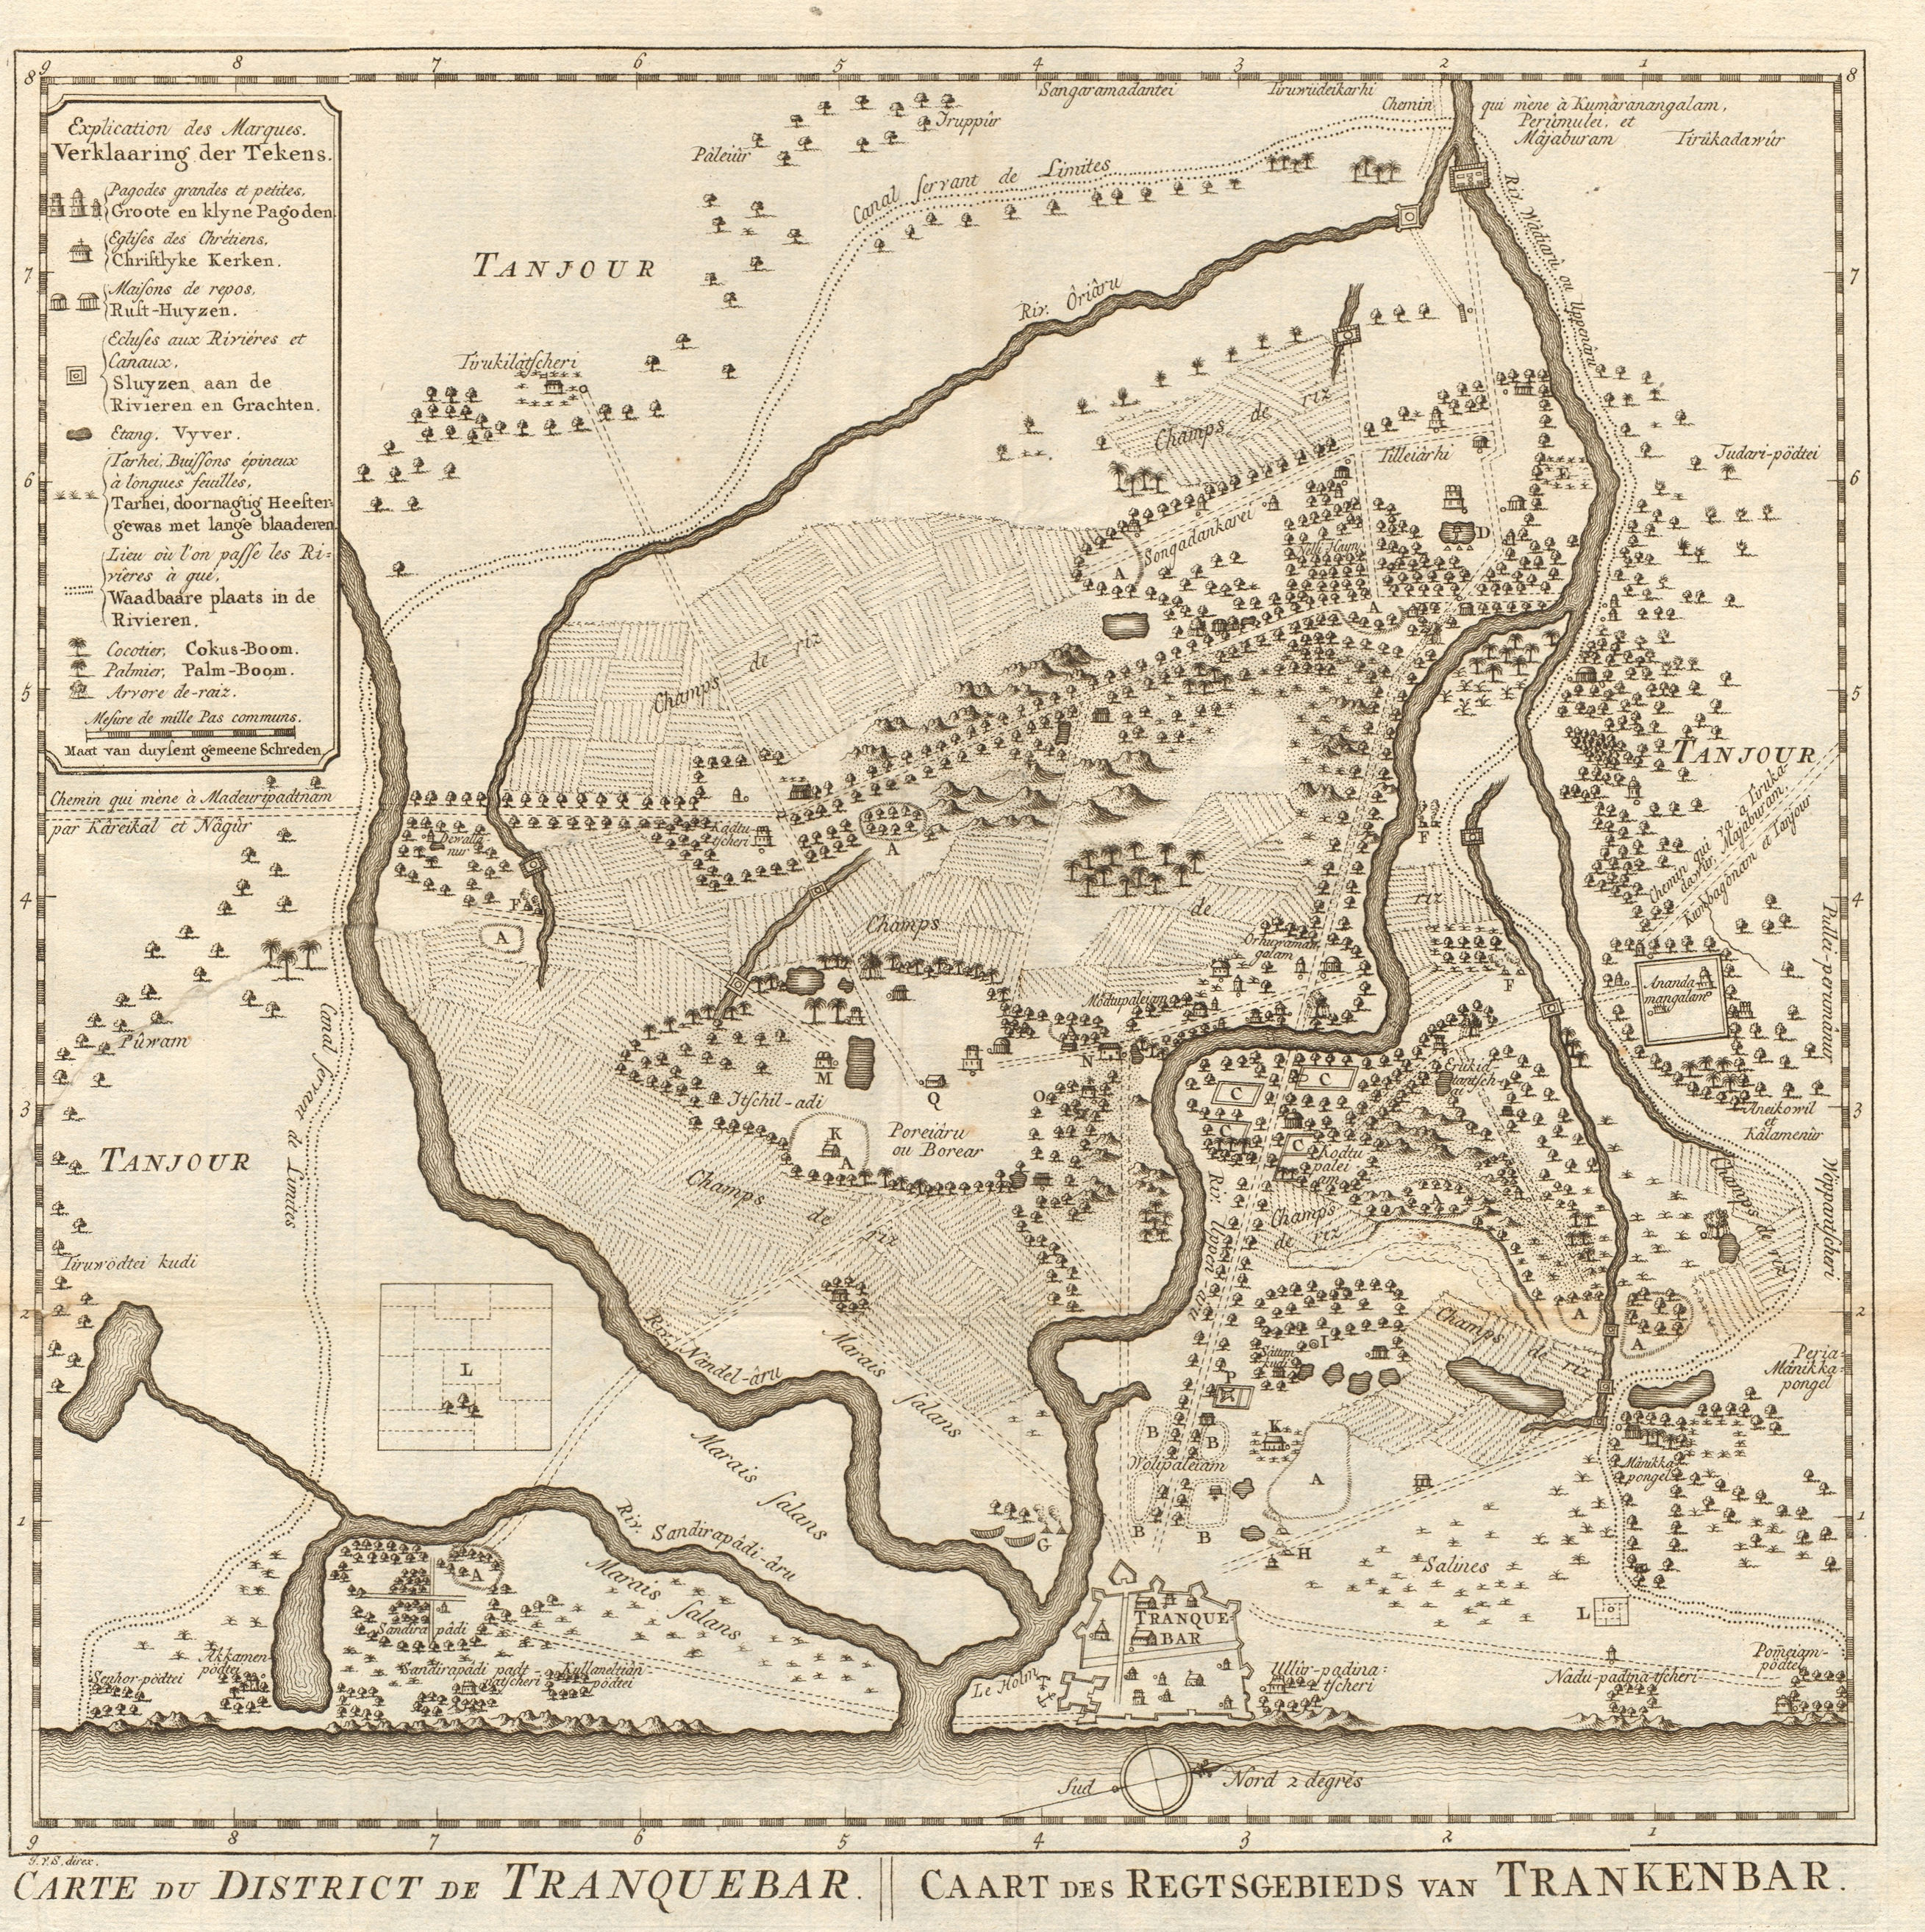 'Carte du District de Tranquebar'. Tharangambadi, India. BELLIN/SCHLEY 1756 map